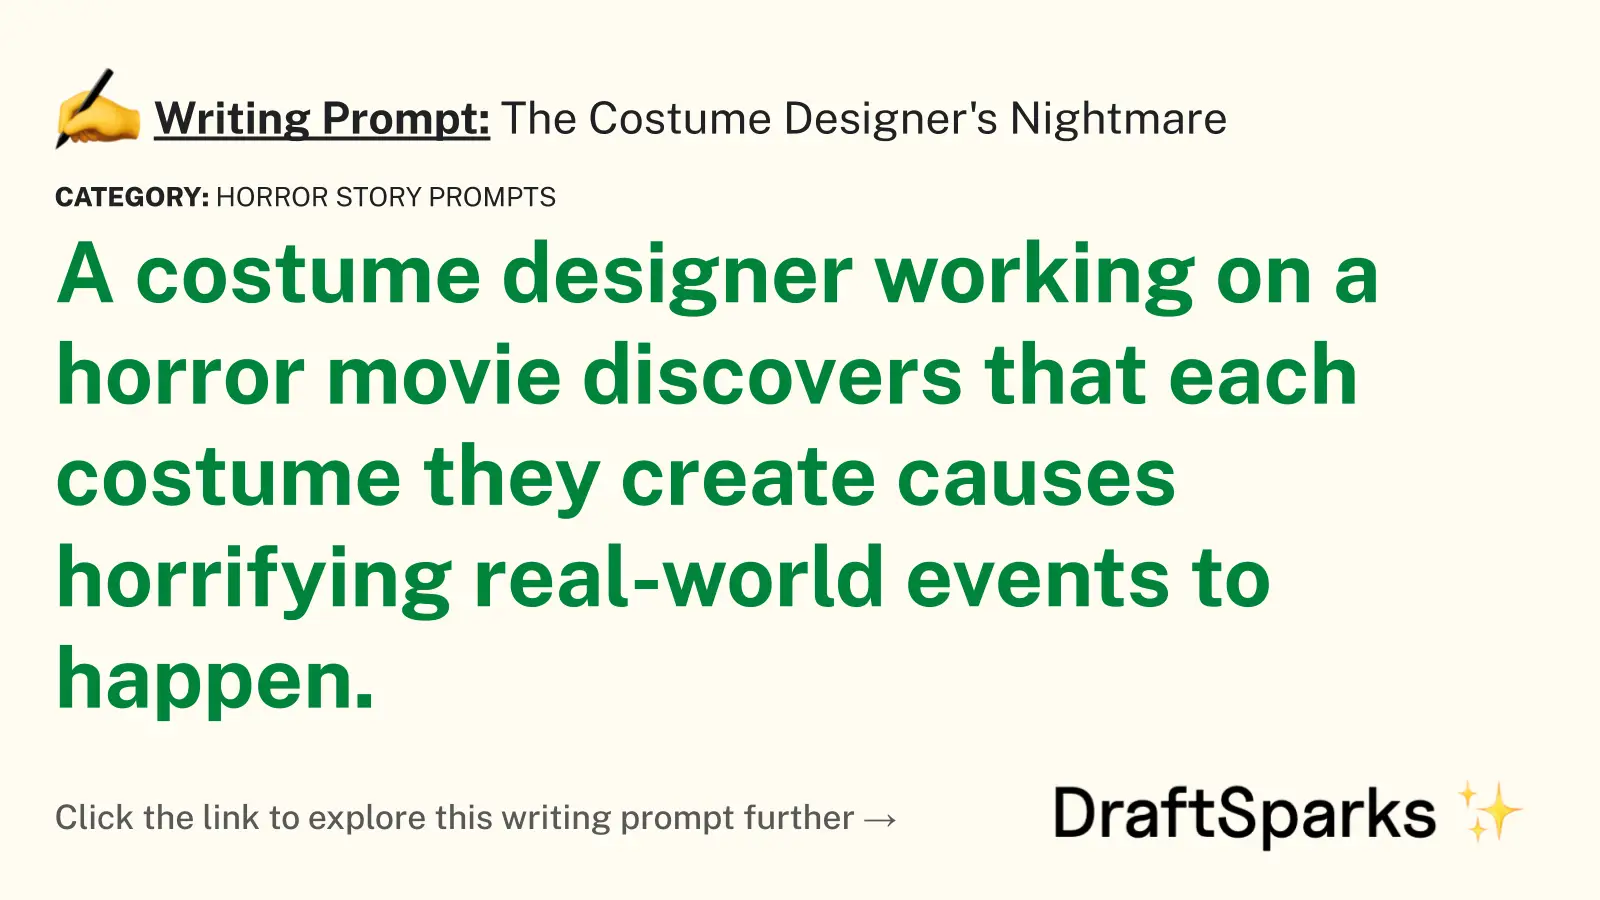 The Costume Designer’s Nightmare